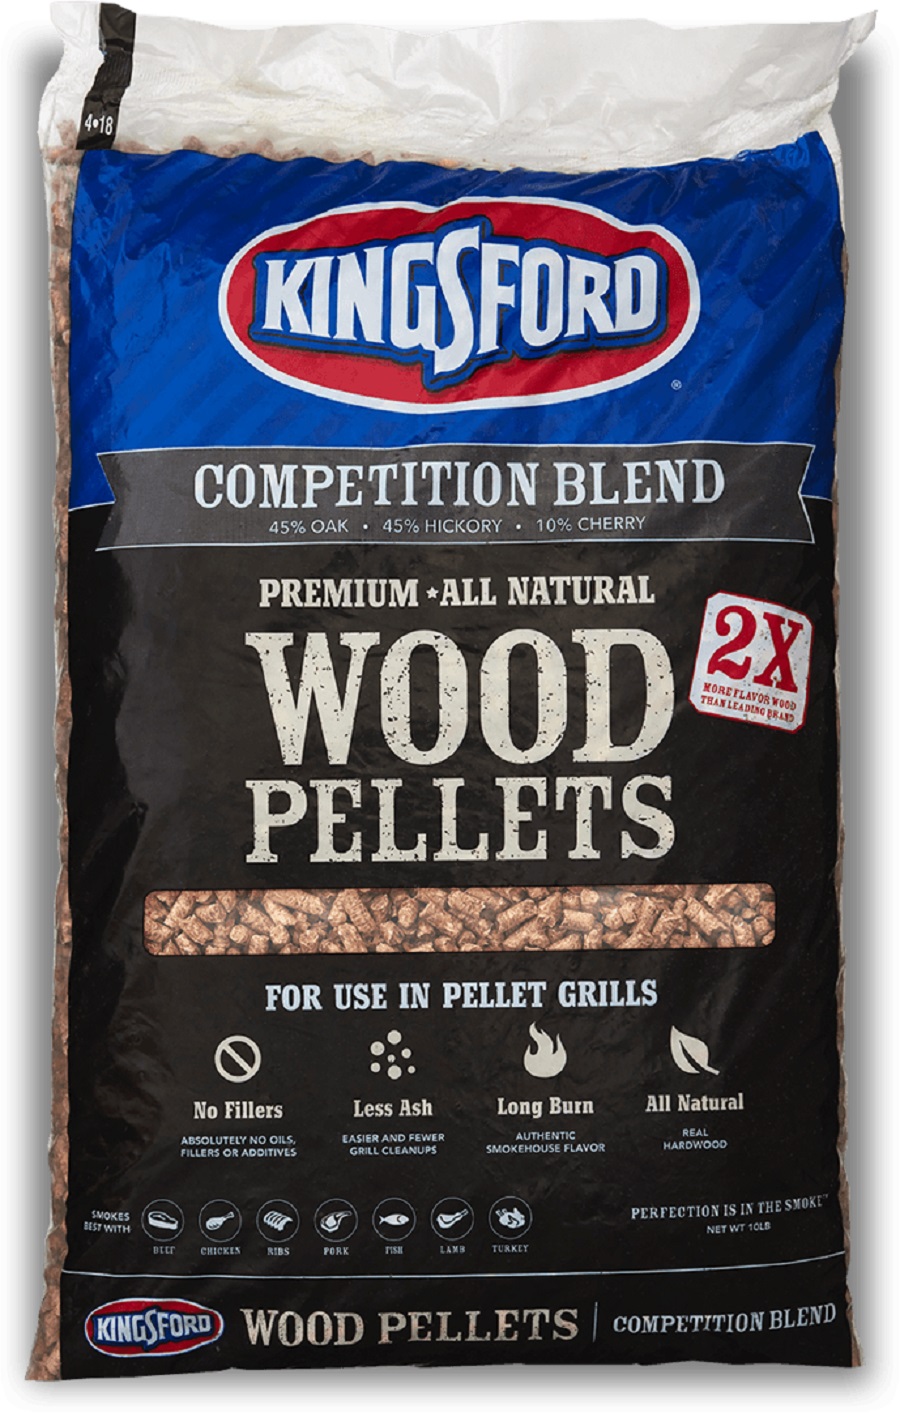 Kingsford 40PM Competition Blend Wood Pellets